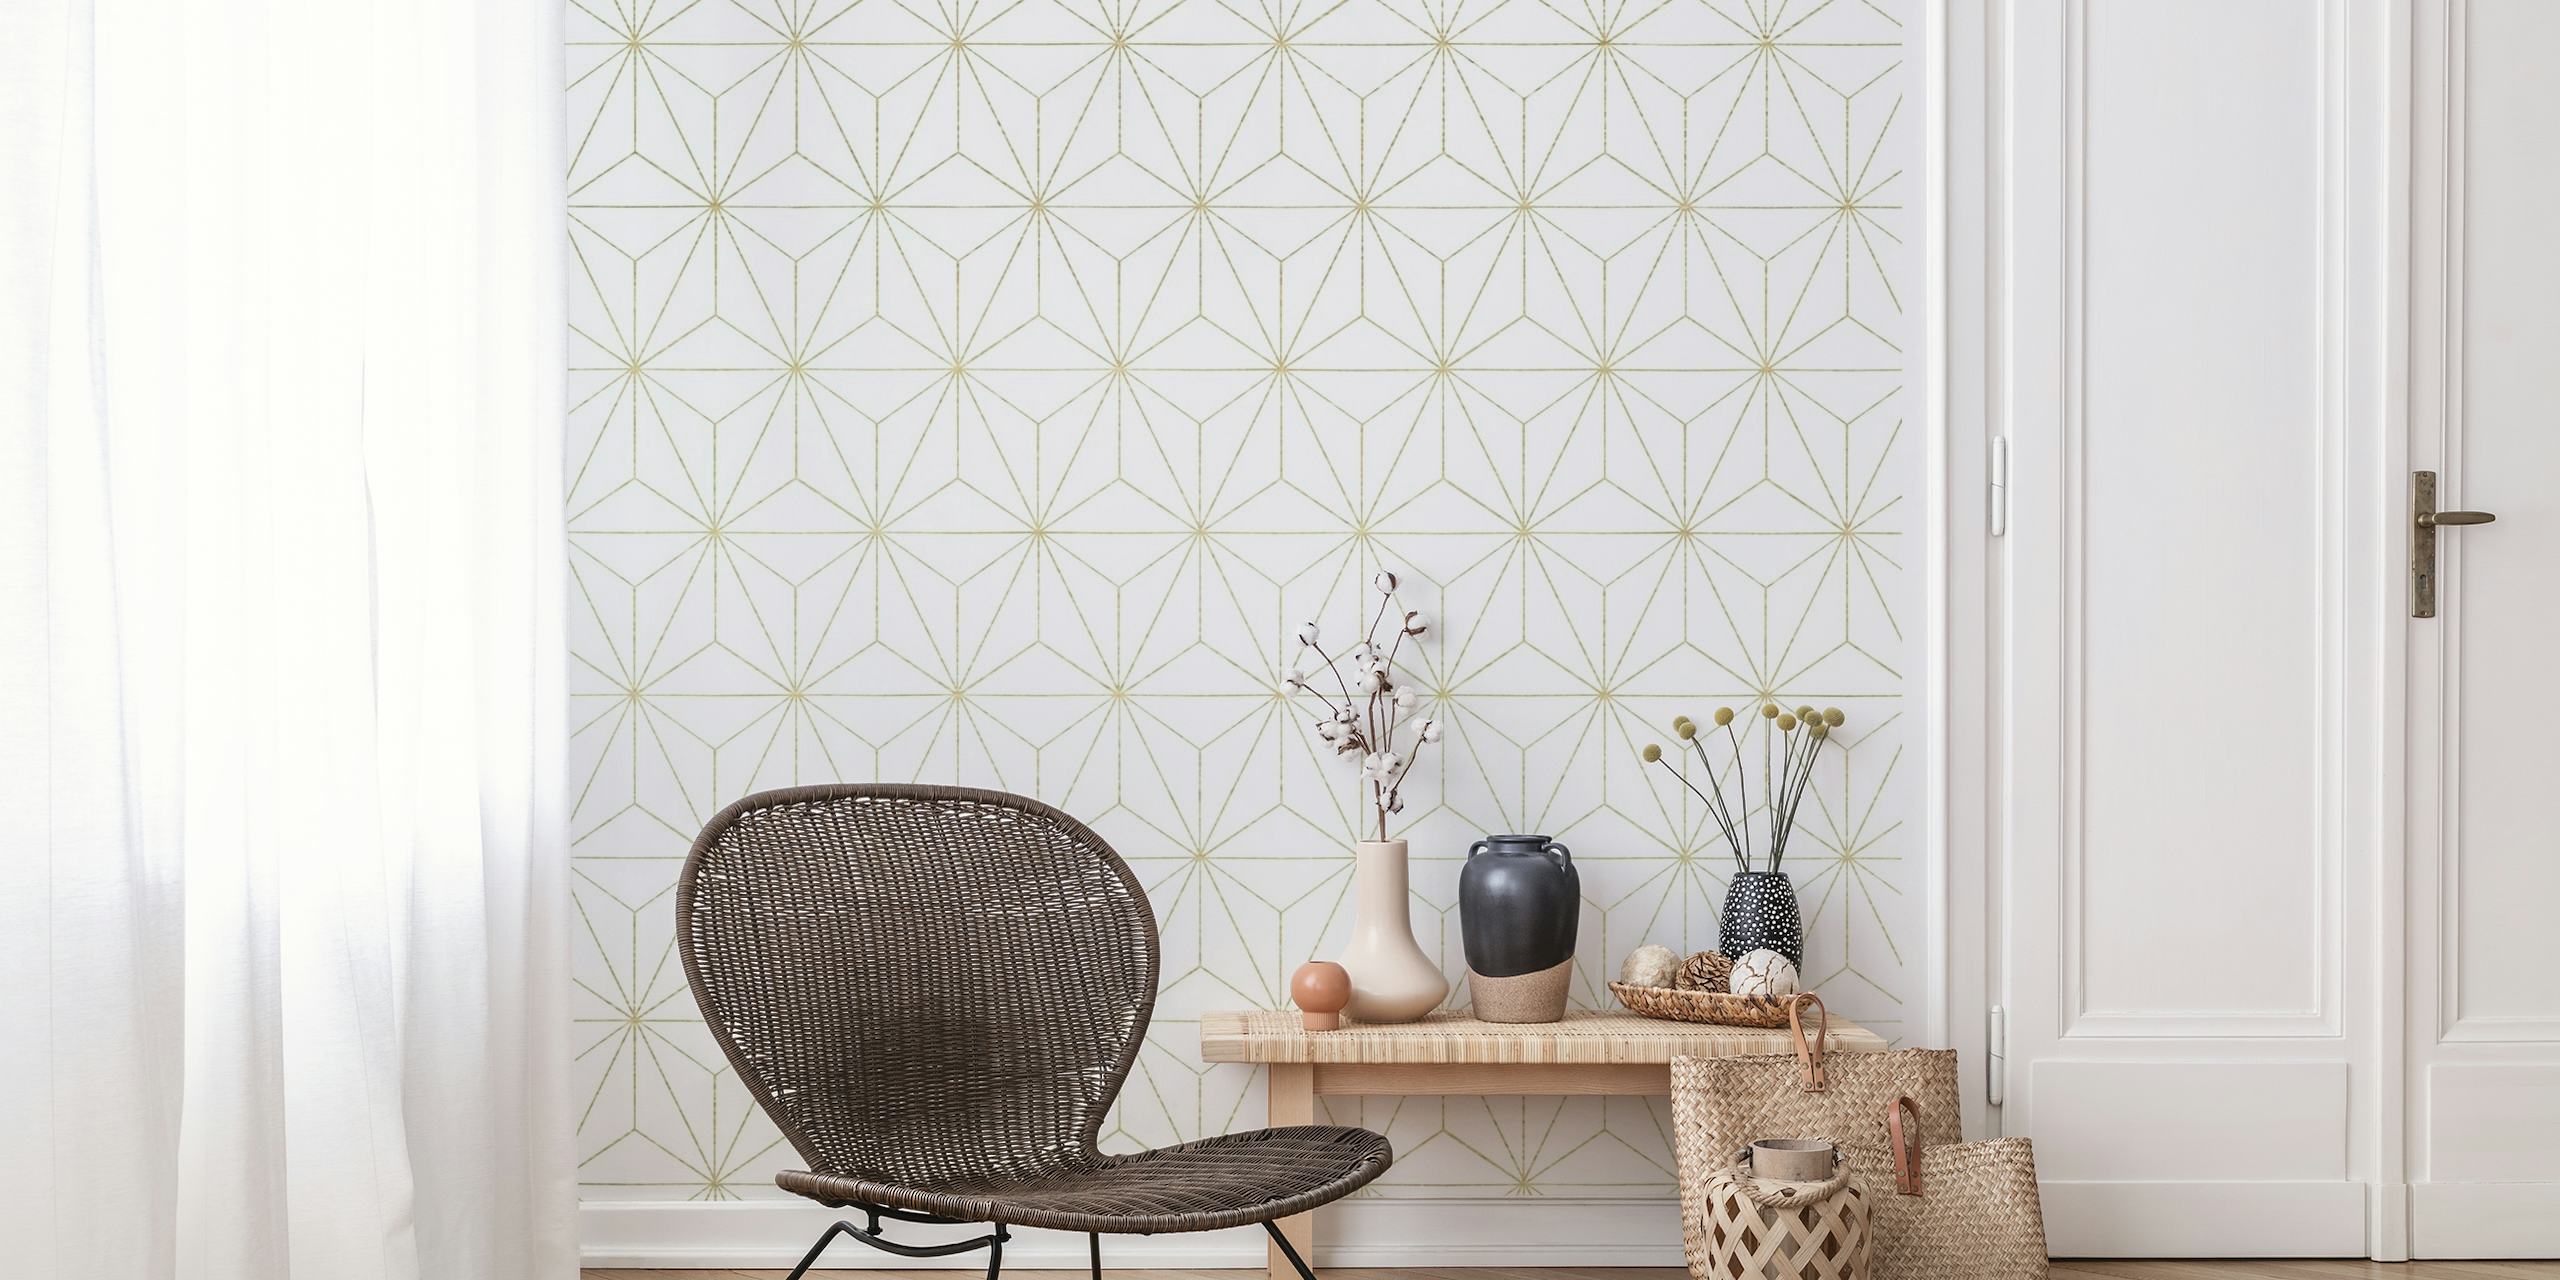 Chic geometric pattern wall mural for modern interior decor